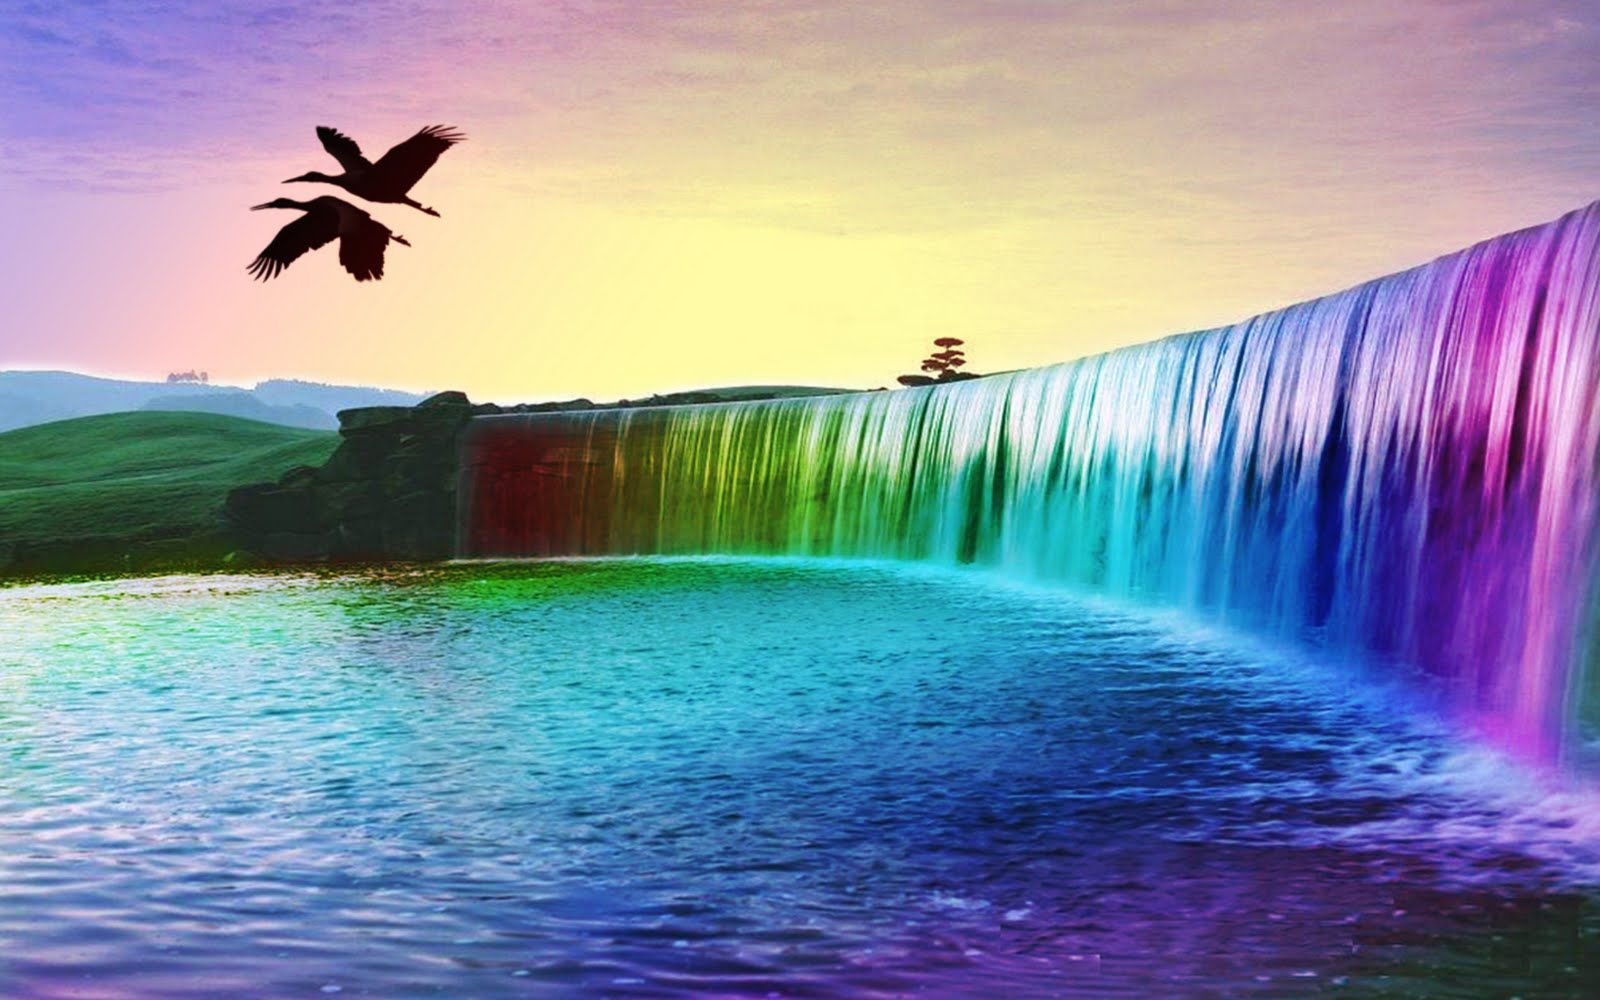 3D Waterfall Wallpaper. Waterfall wallpaper, Waterfall, Rainbow waterfall